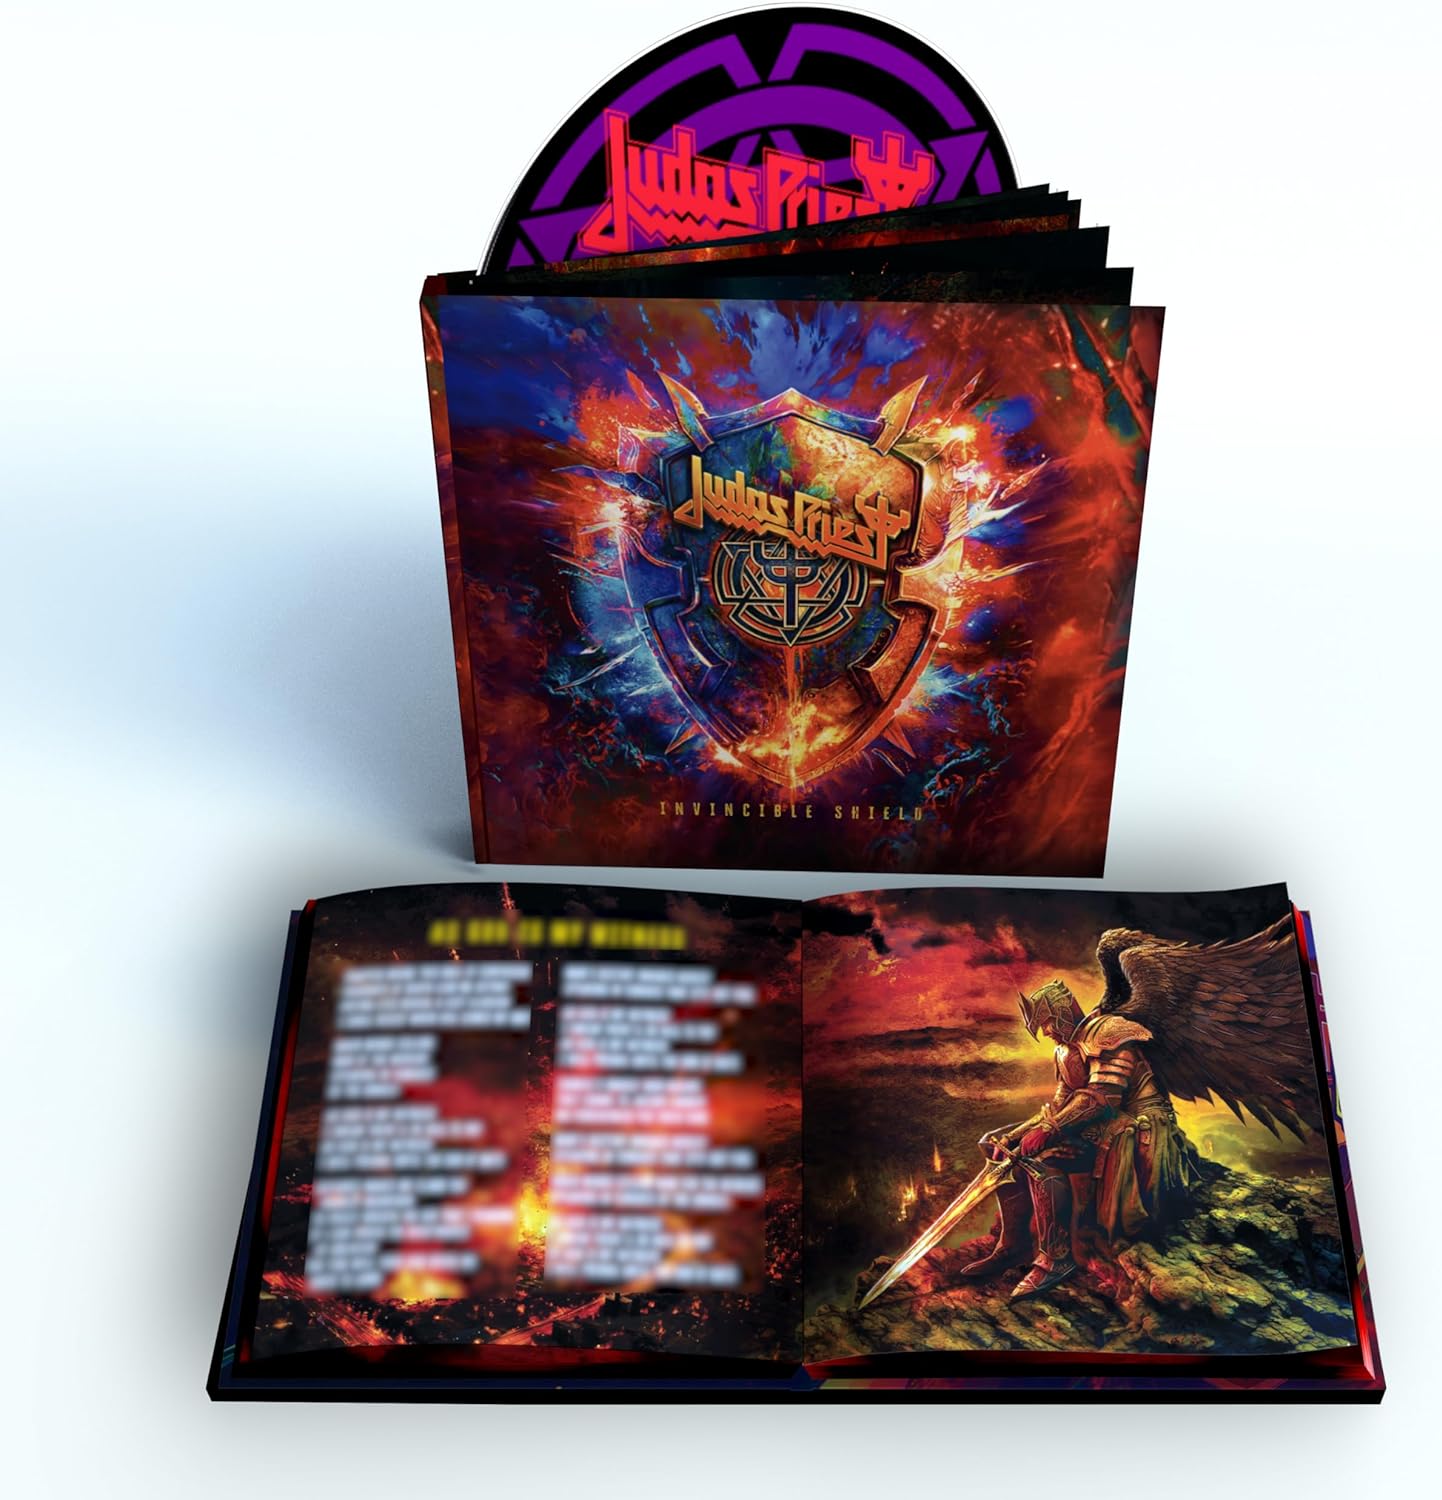 Judas Priest "Invincible Shield" Deluxe CD in Casebound Book